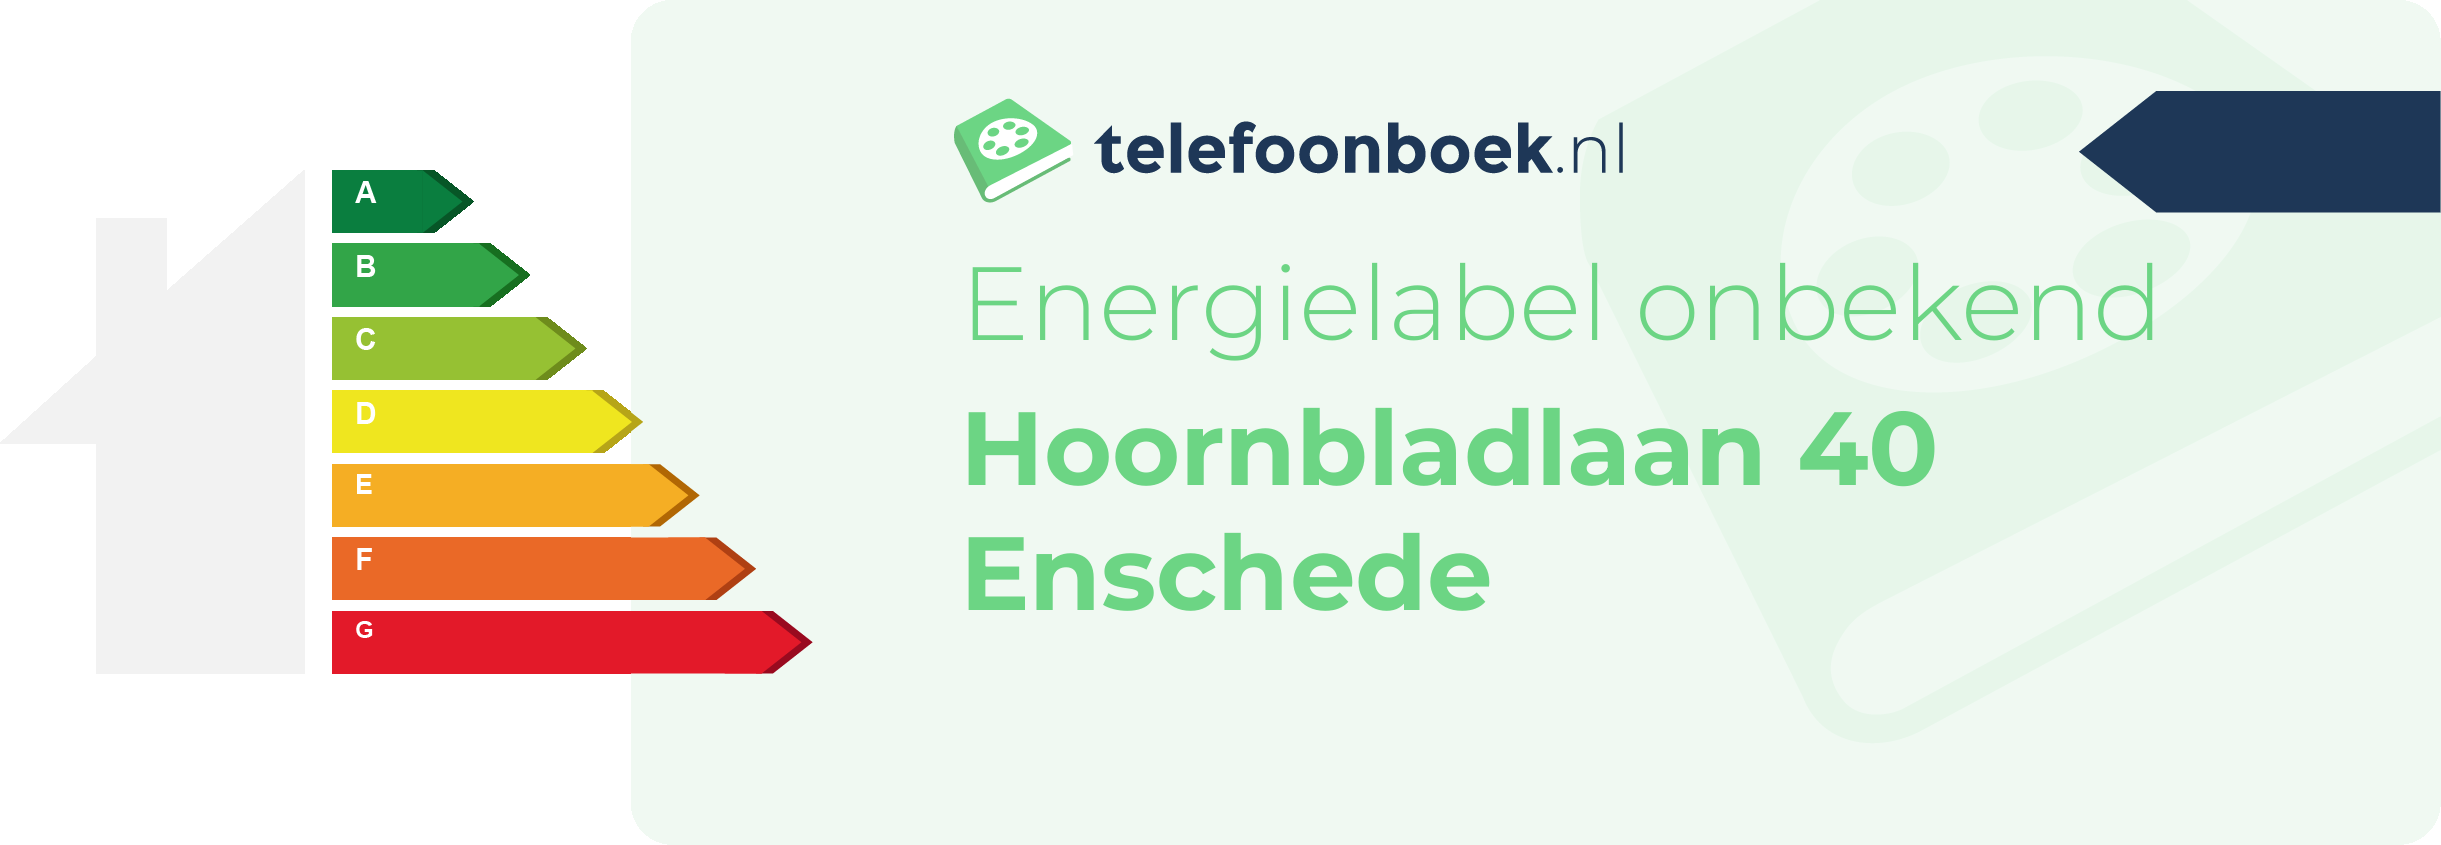 Energielabel Hoornbladlaan 40 Enschede